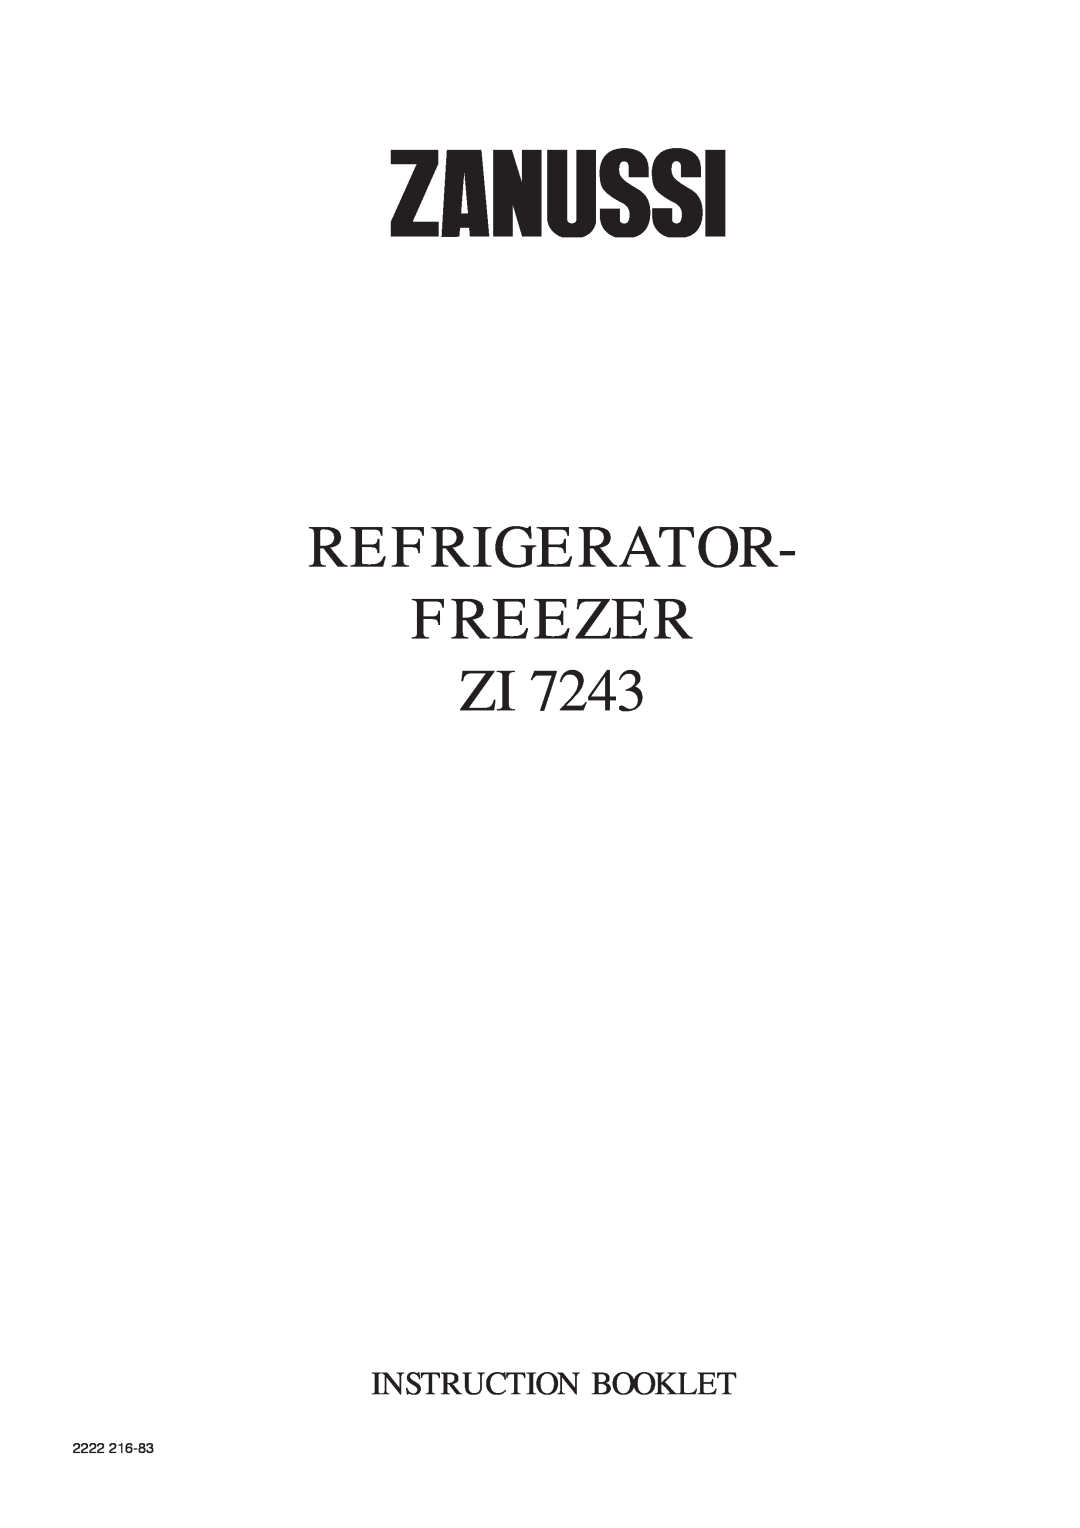 Zanussi ZI 7243 manual Refrigerator Freezer Zi, Instruction Booklet, 2222 